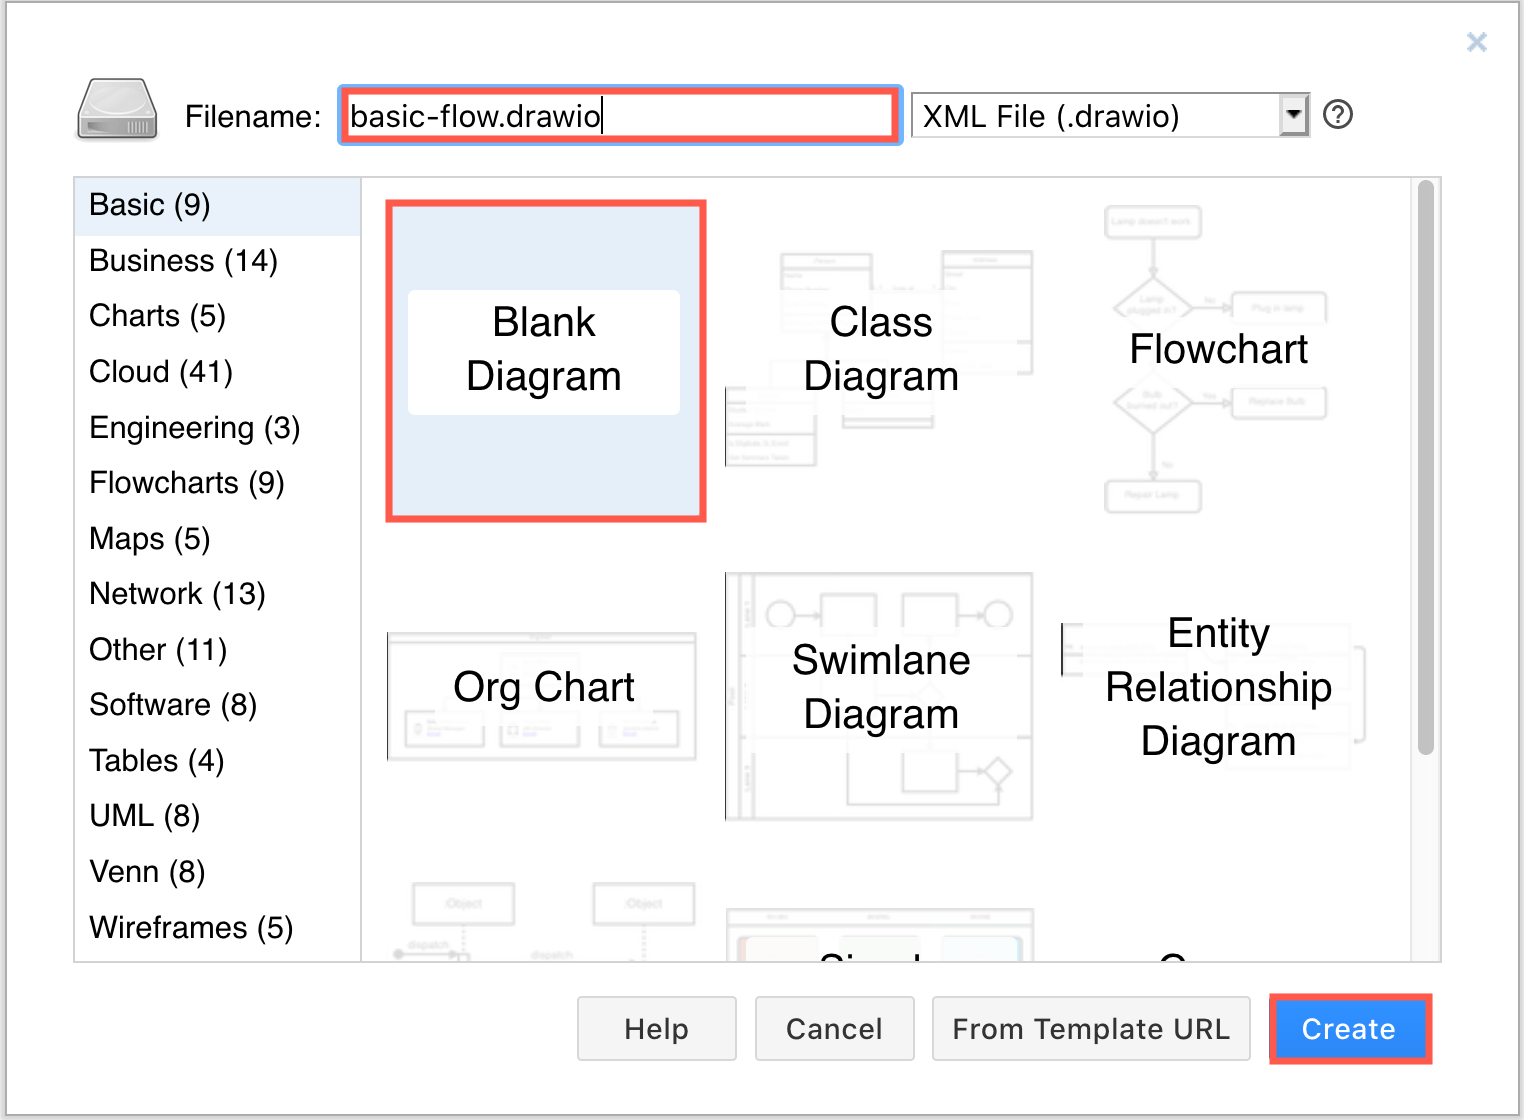 Enter a filename, select Blank Diagram, and click Create